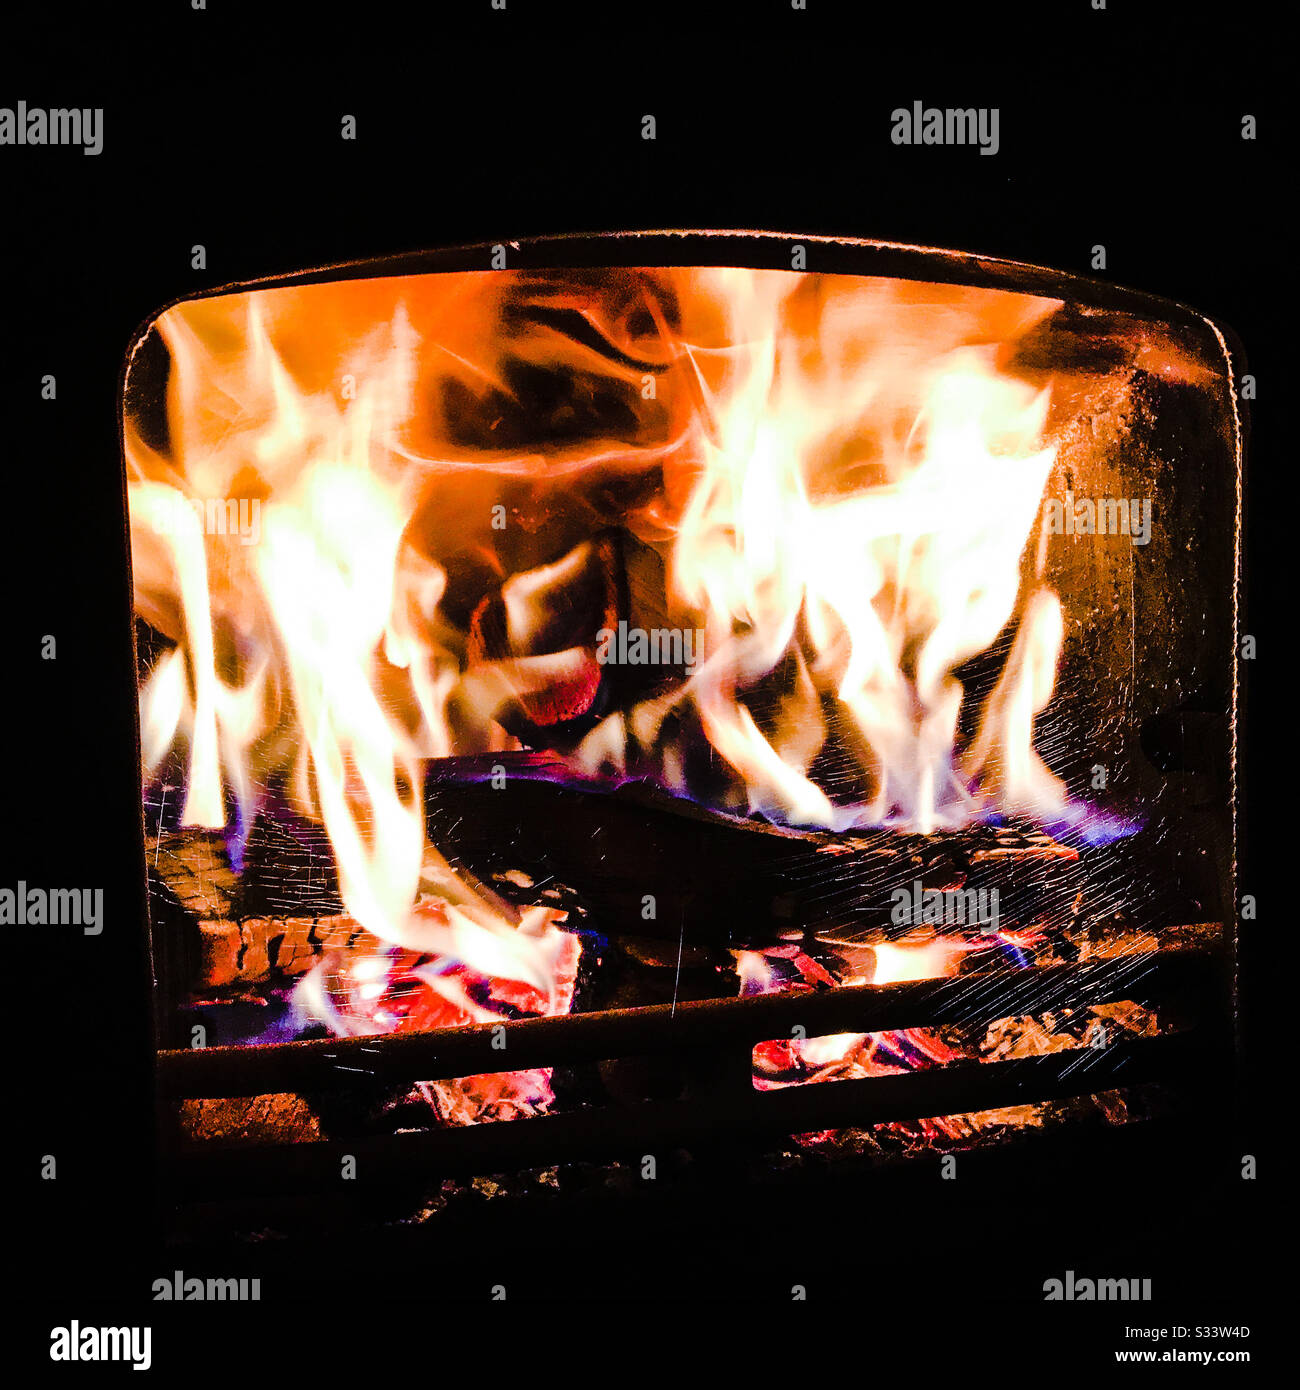 Roaring fireplace wood burner alight providing heat Stock Photo